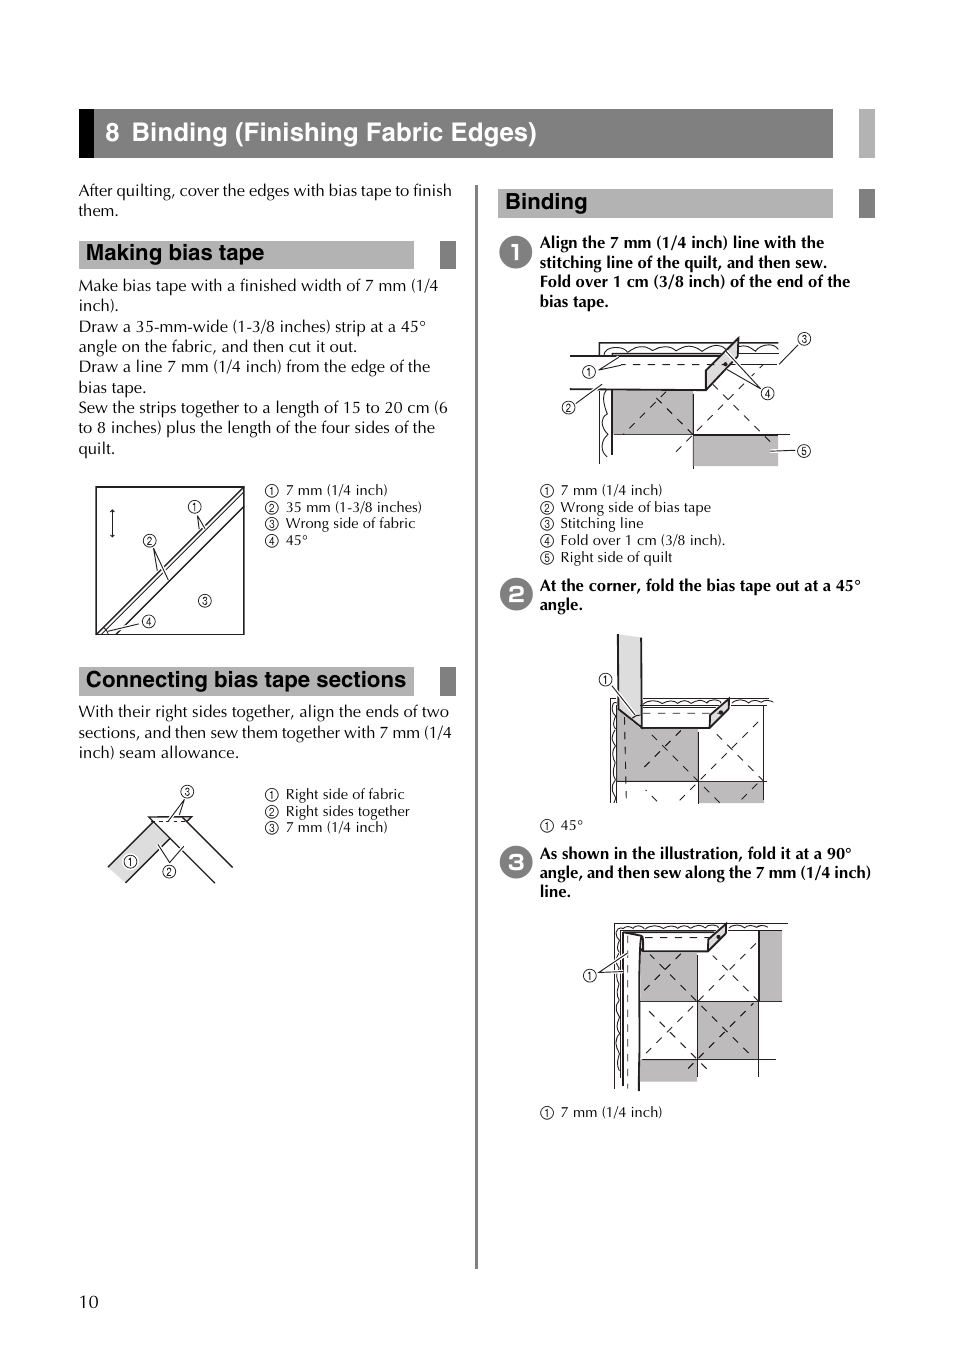 8 binding (finishing fabric edges), Making bias tape, Binding | Brother CM550DX User Manual | Page 10 / 12